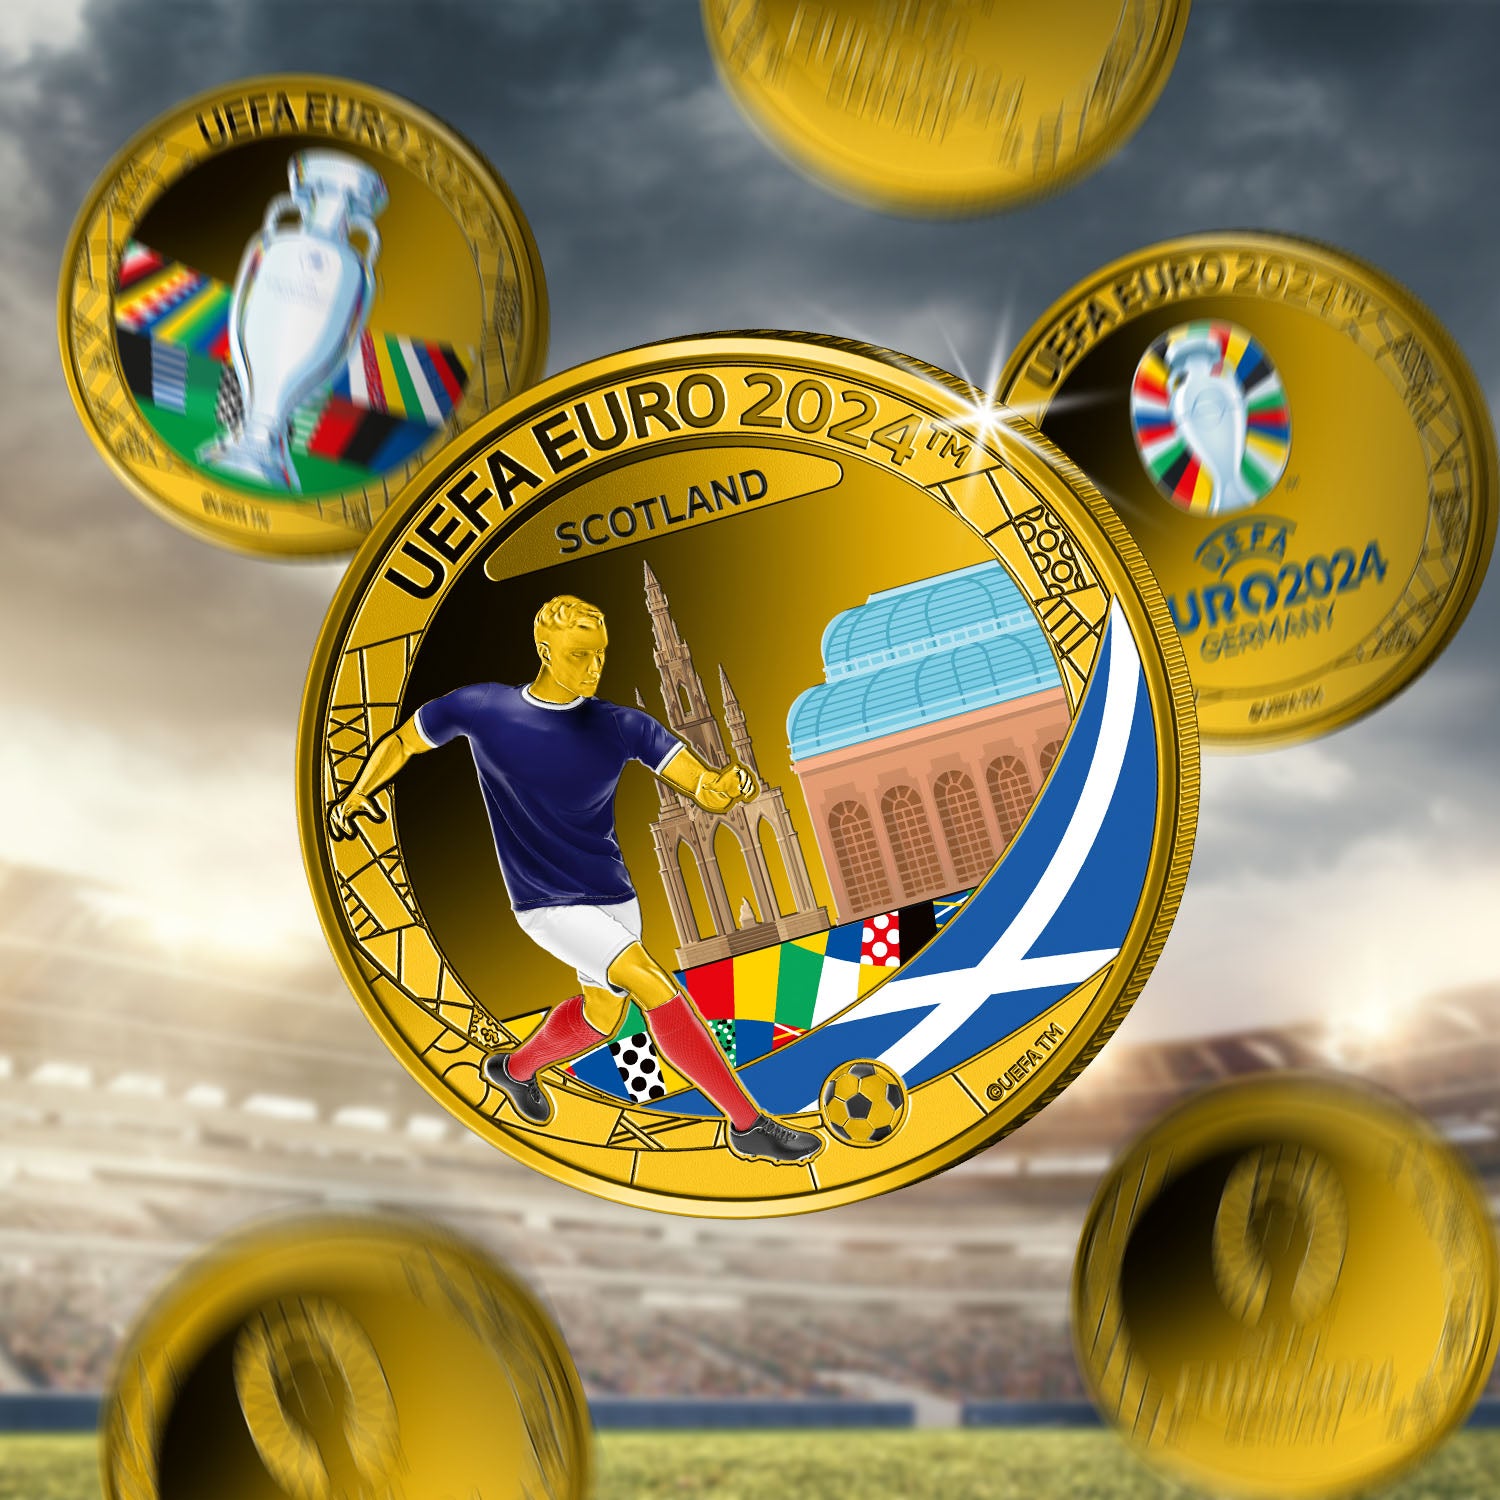 UEFA EURO 2024 Official Scotland Team Coin Box Set